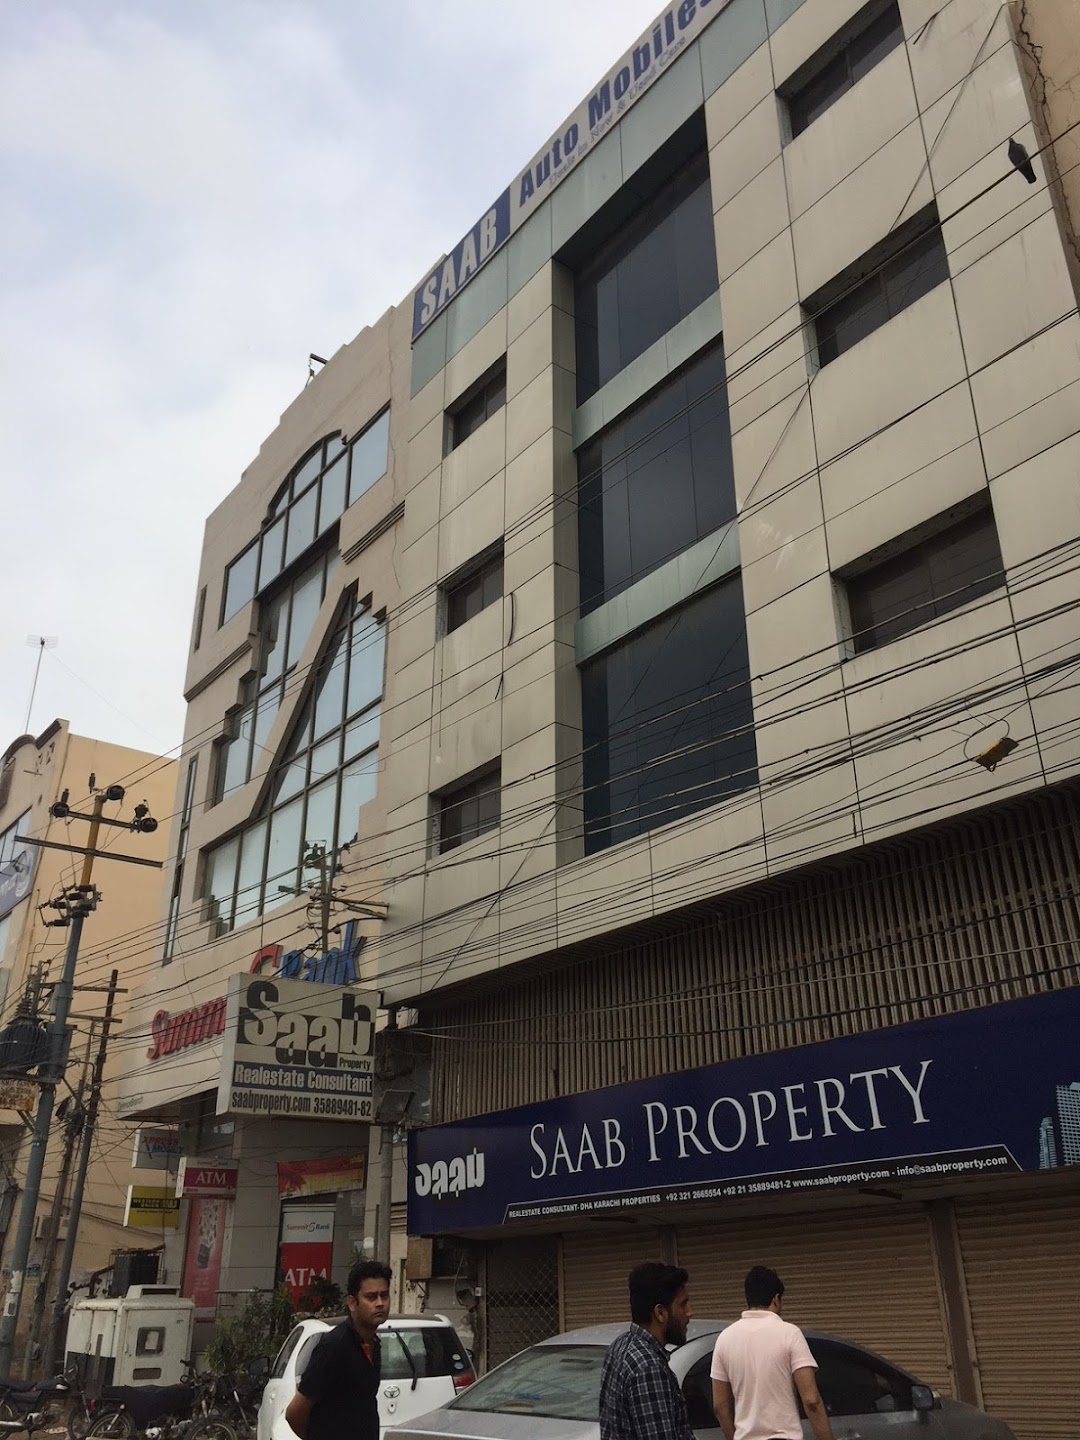 Saab Property